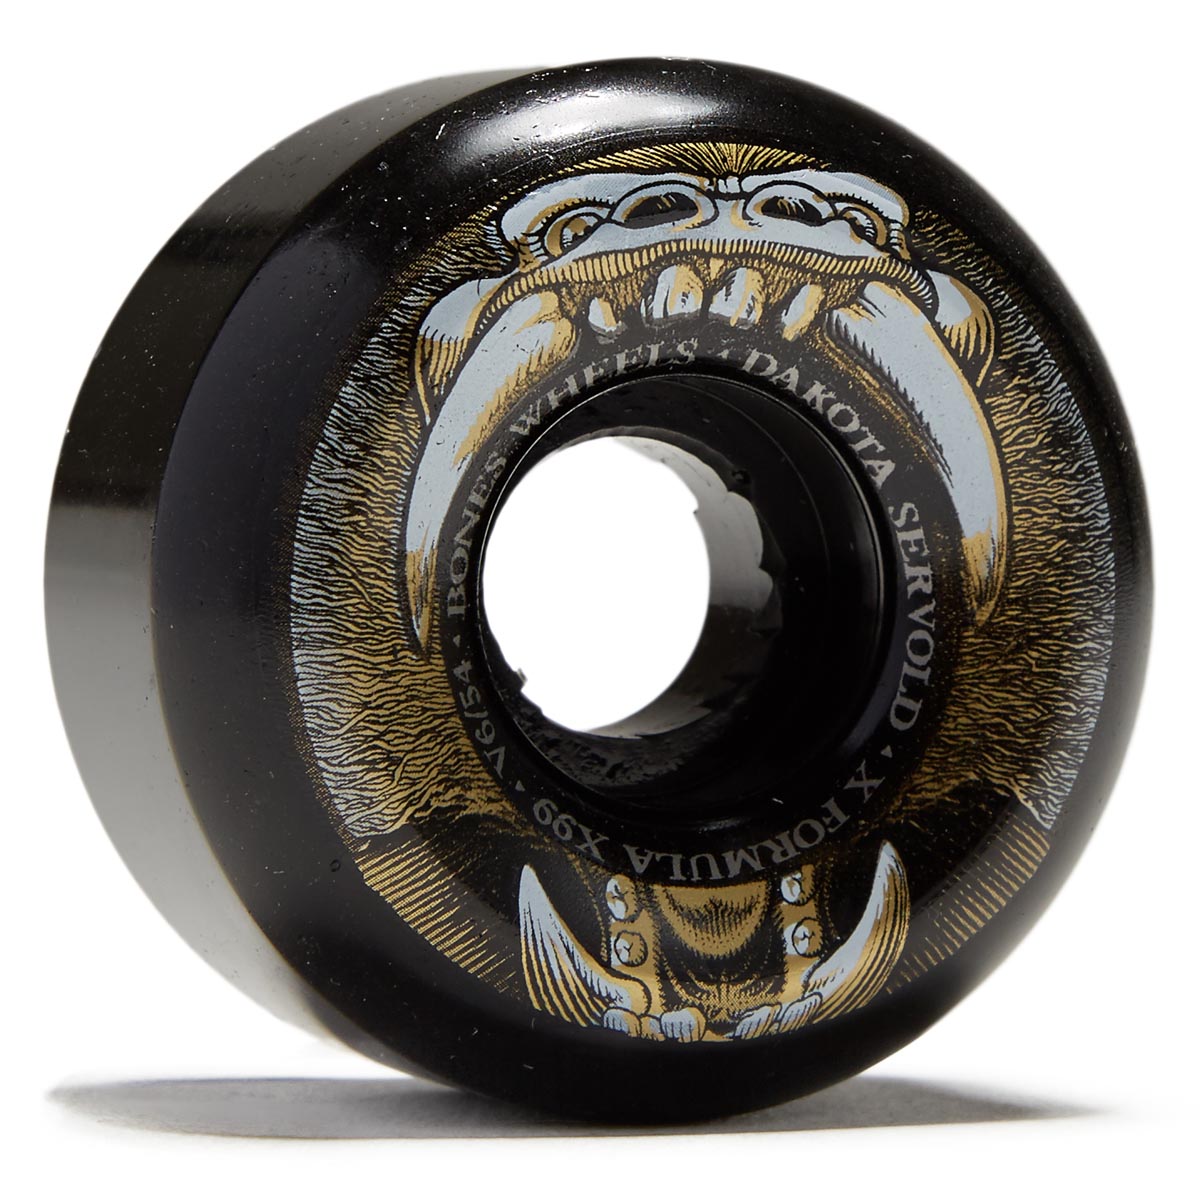 Bones X-Formula Dakota Servold Baboonatic 99a V6 Widecut Skateboard Wheels - Black - 54mm image 1